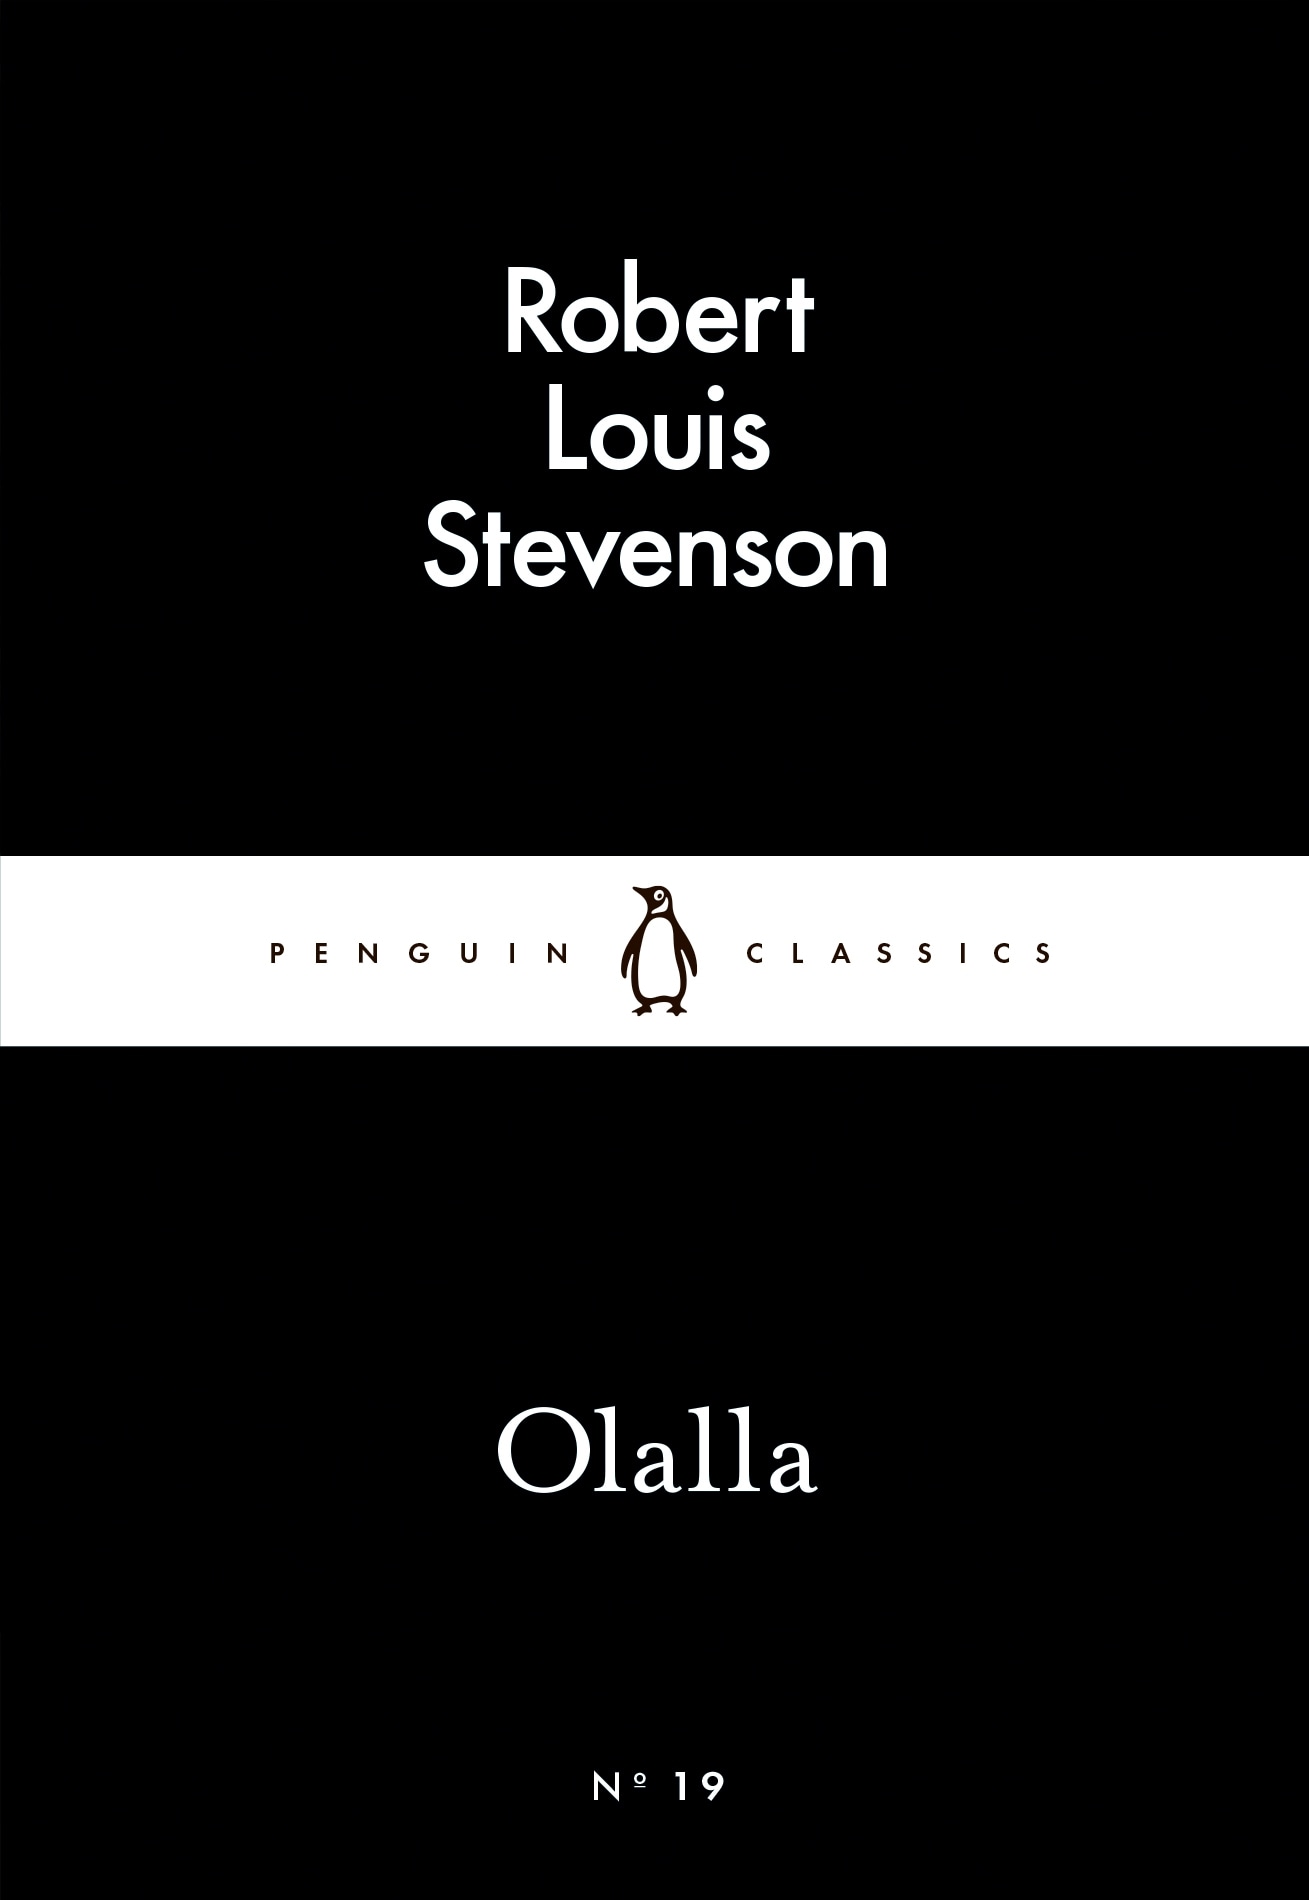 Book “Olalla” by Robert Louis Stevenson — February 26, 2015